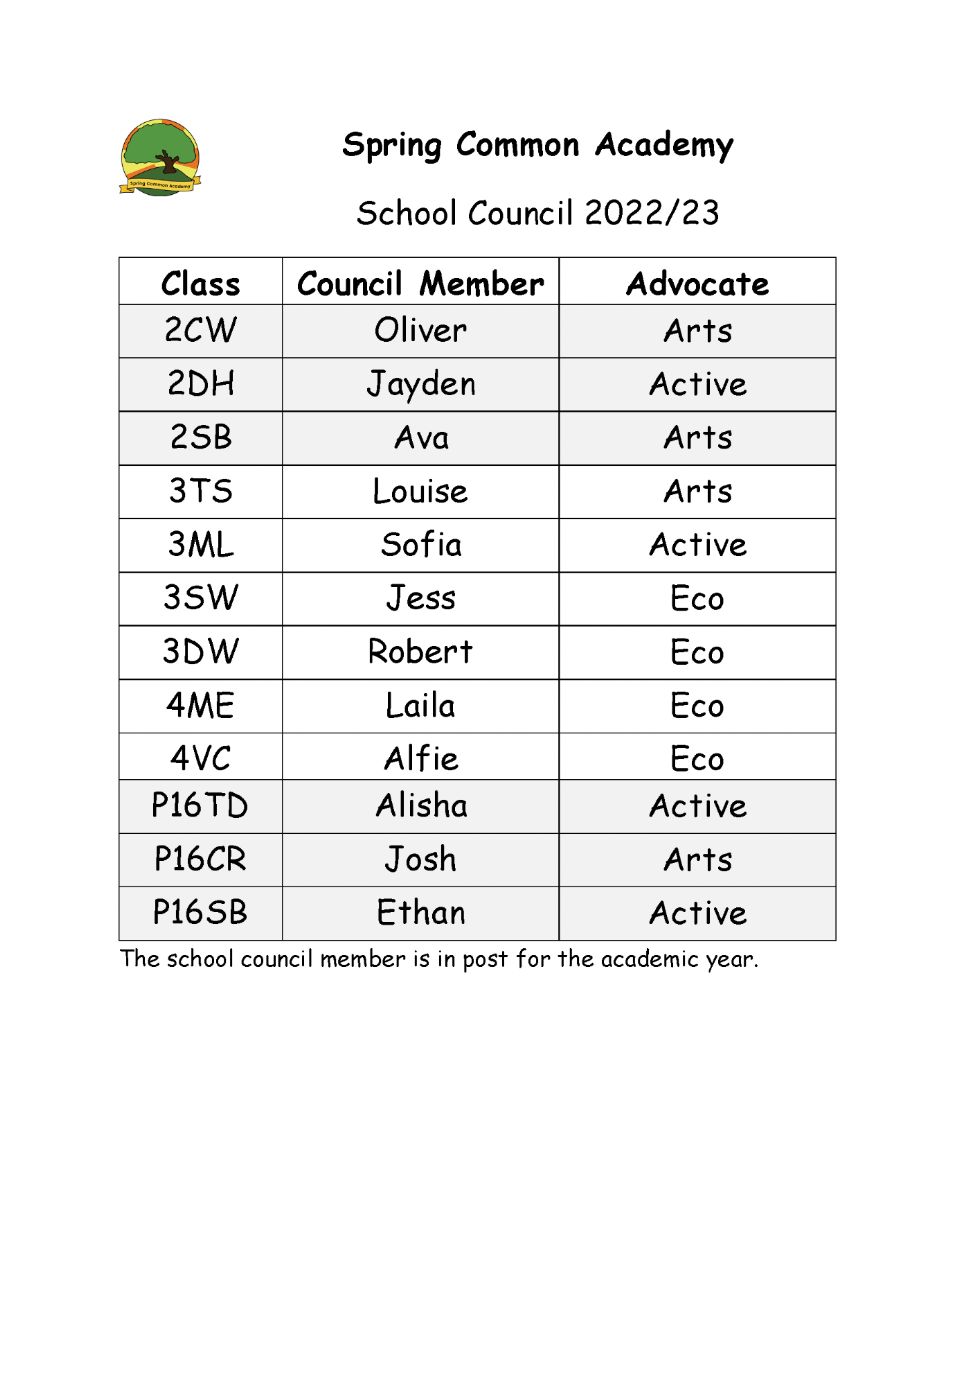 School Council 2022-23